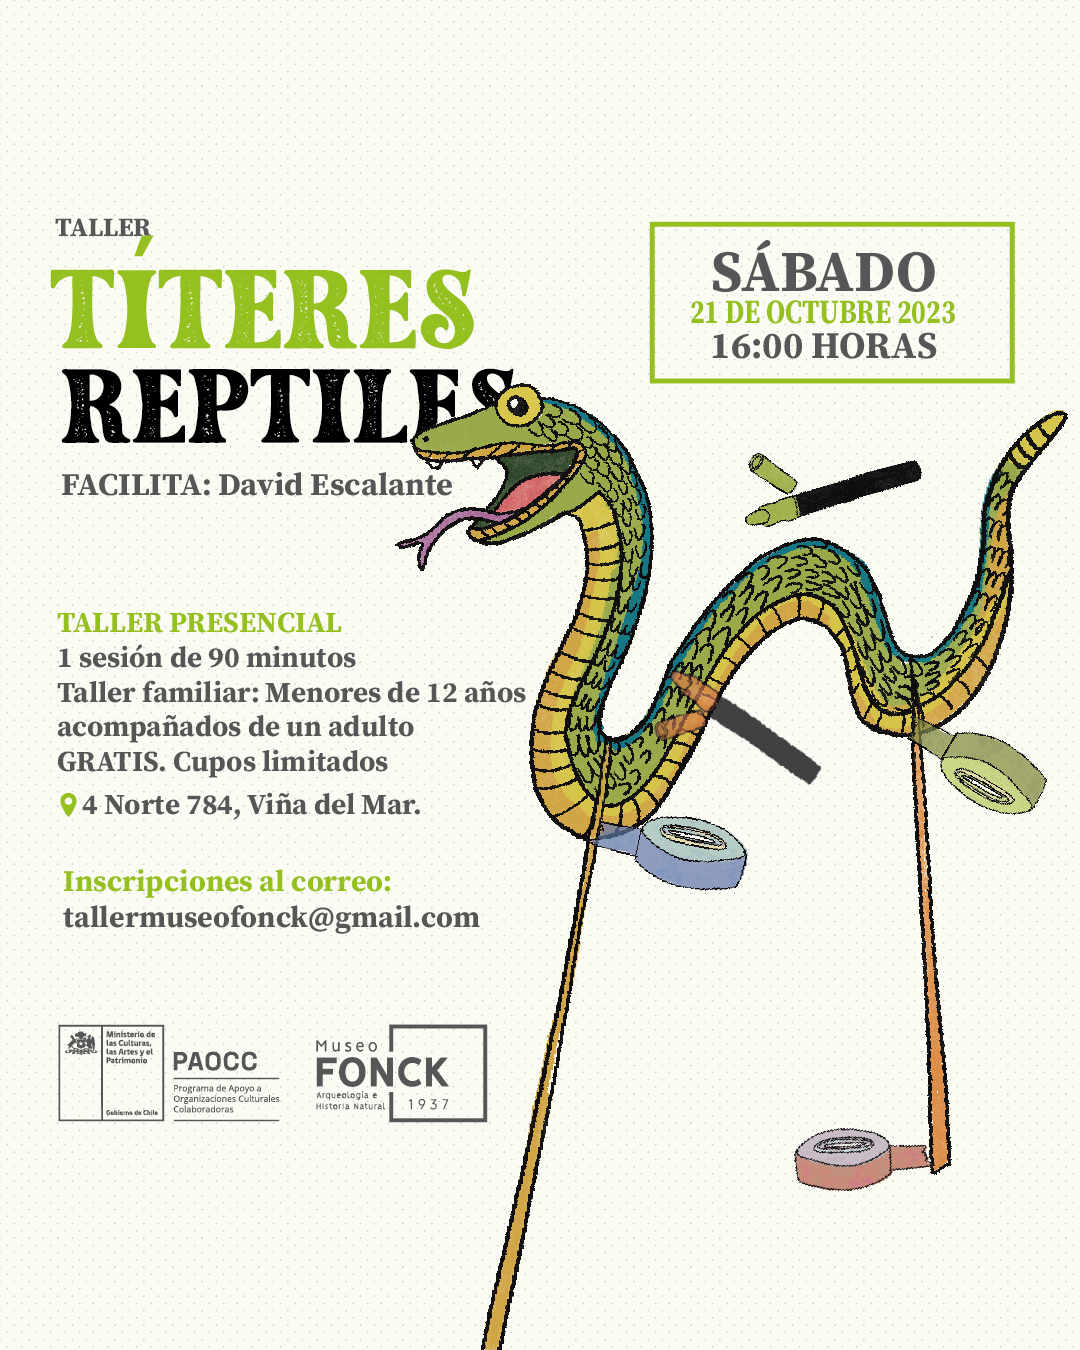 Museo Fonck te invita a participar de taller gratuito para fabricar un títere inspirado en un reptil